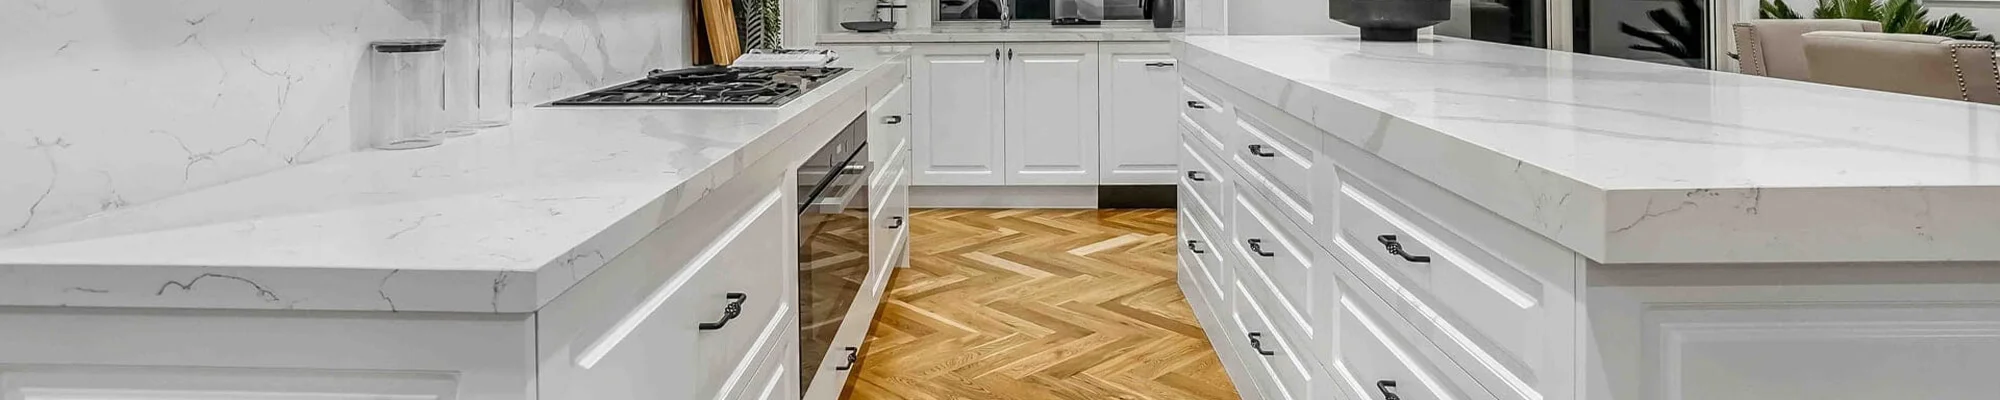 Hardwood flooring in kitchen